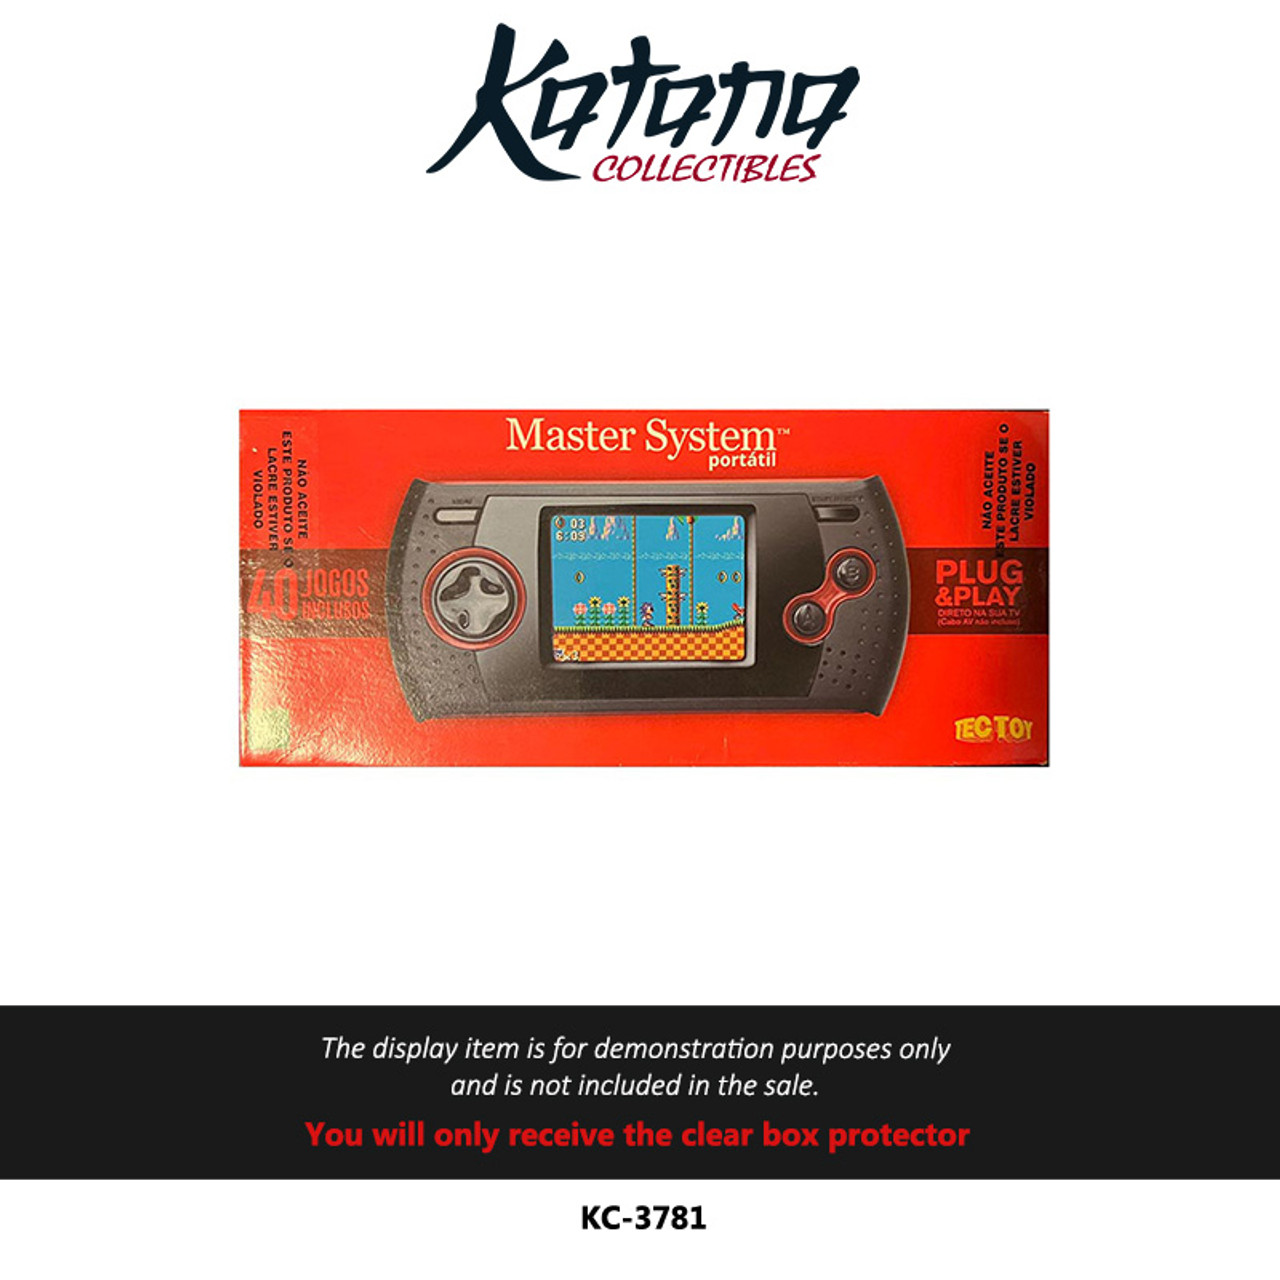 Katana Collectibles Protector For tectoy ( sega brazil ) master system handheld